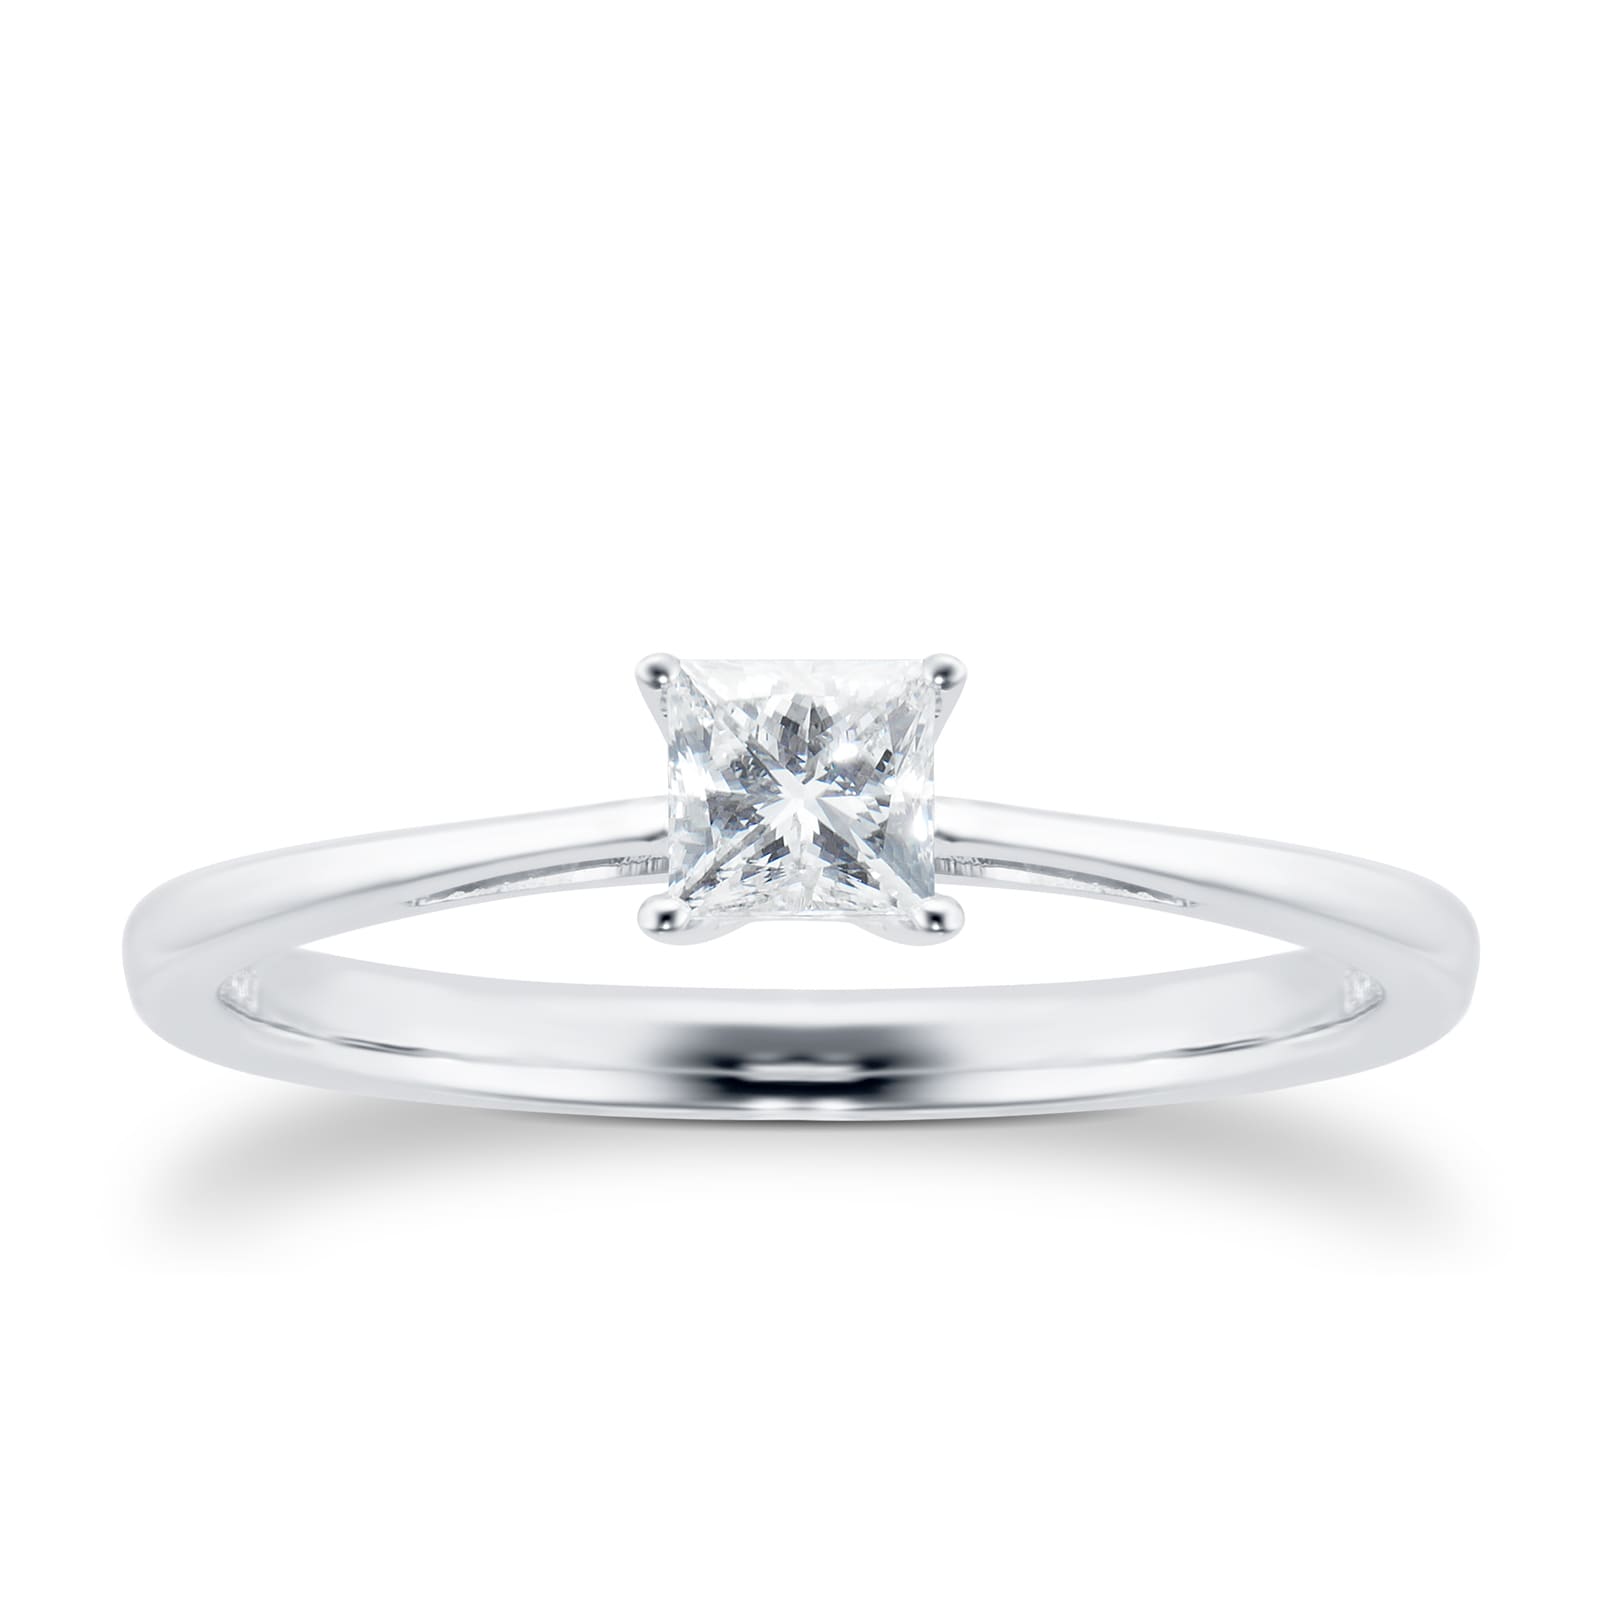 18ct White Gold 0.25ct Princess Cut Diamond Engagement Ring - Ring Size Q